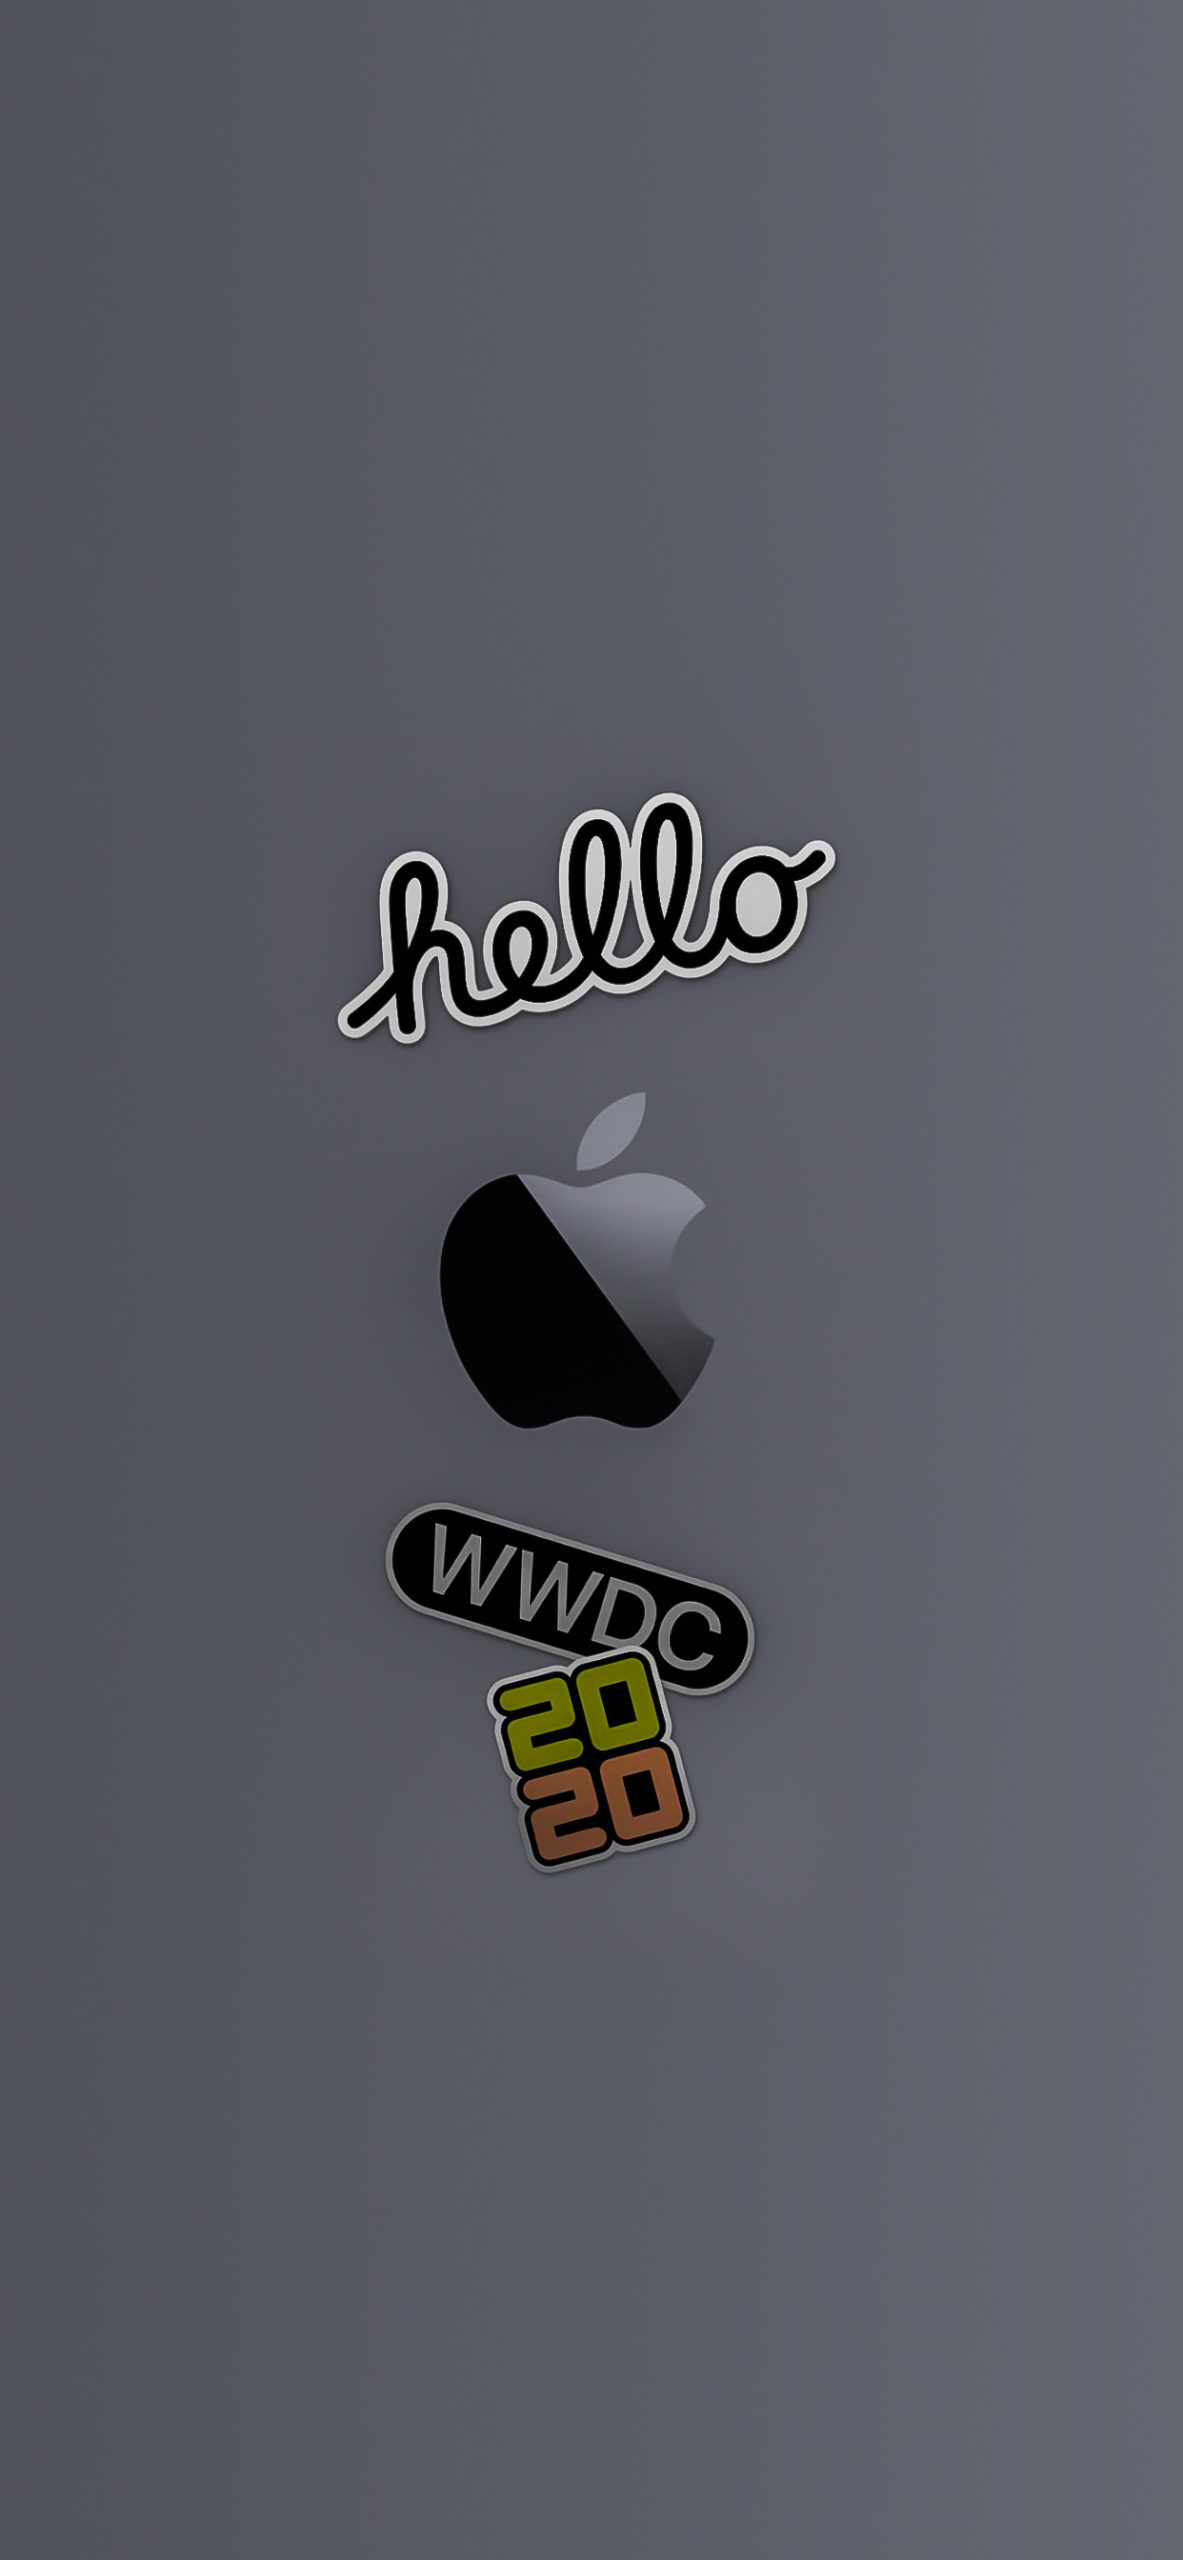 wwdc-2020-wallpaper-iphone-ar72014-idownloadblog-apple-logo-space-gray